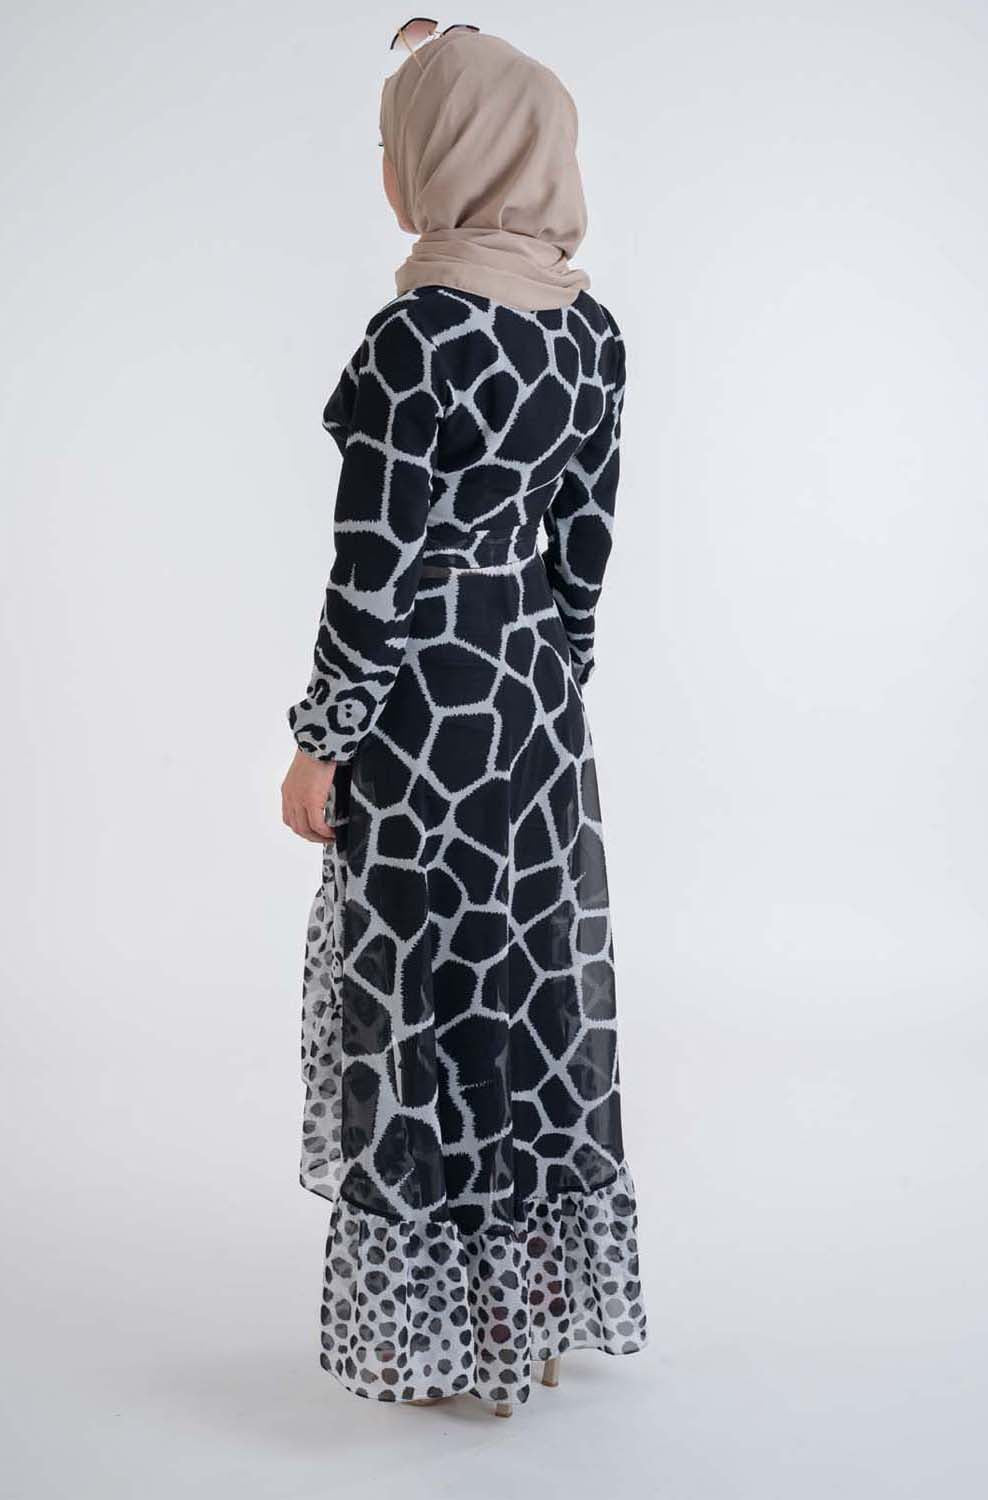 Leo Prİnt Tunic- Modest Dresses, Abaya, Long Sleeve dress!